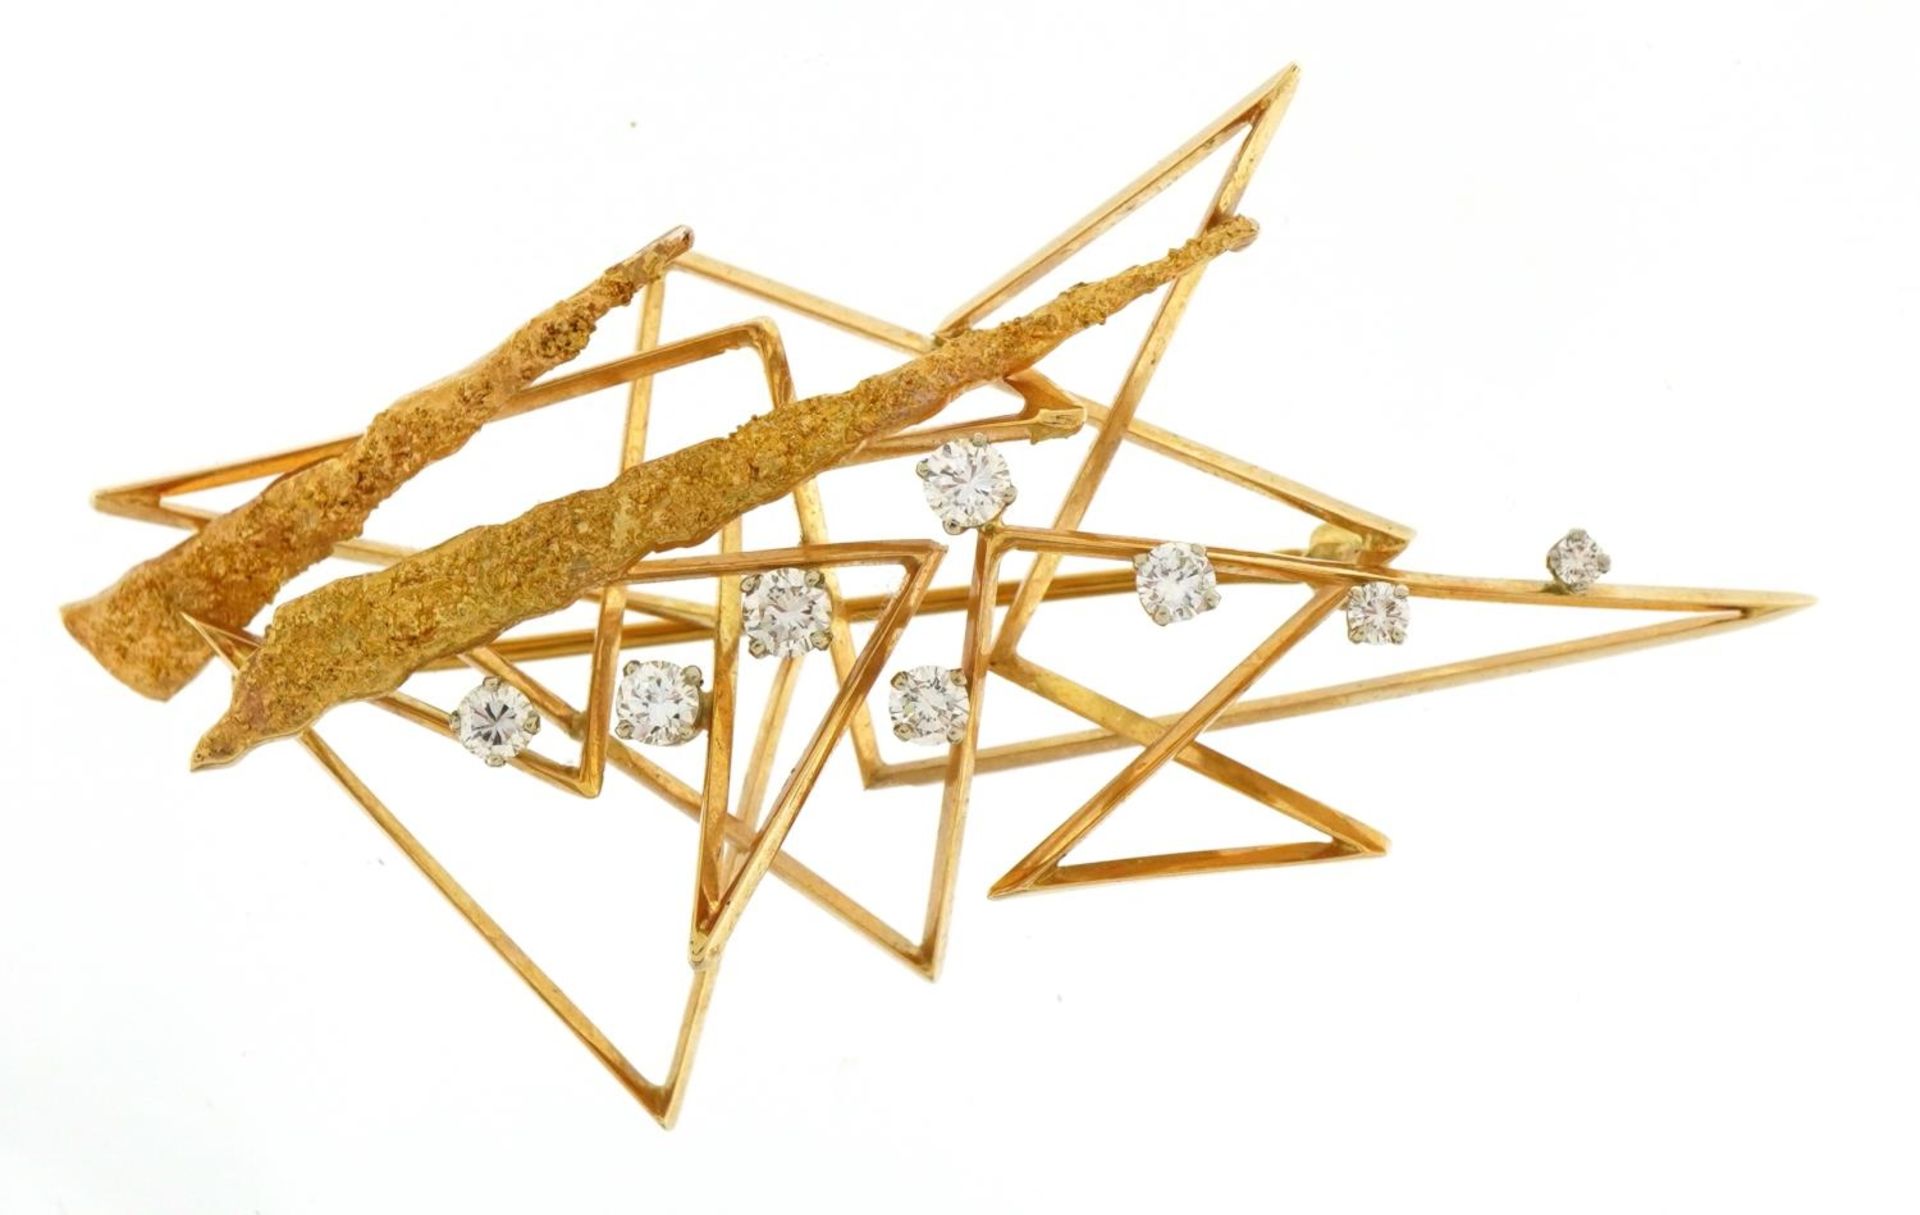 Toni Cavelti Modernist 1960s 18k gold brooch set with eight graduated diamonds, the largest